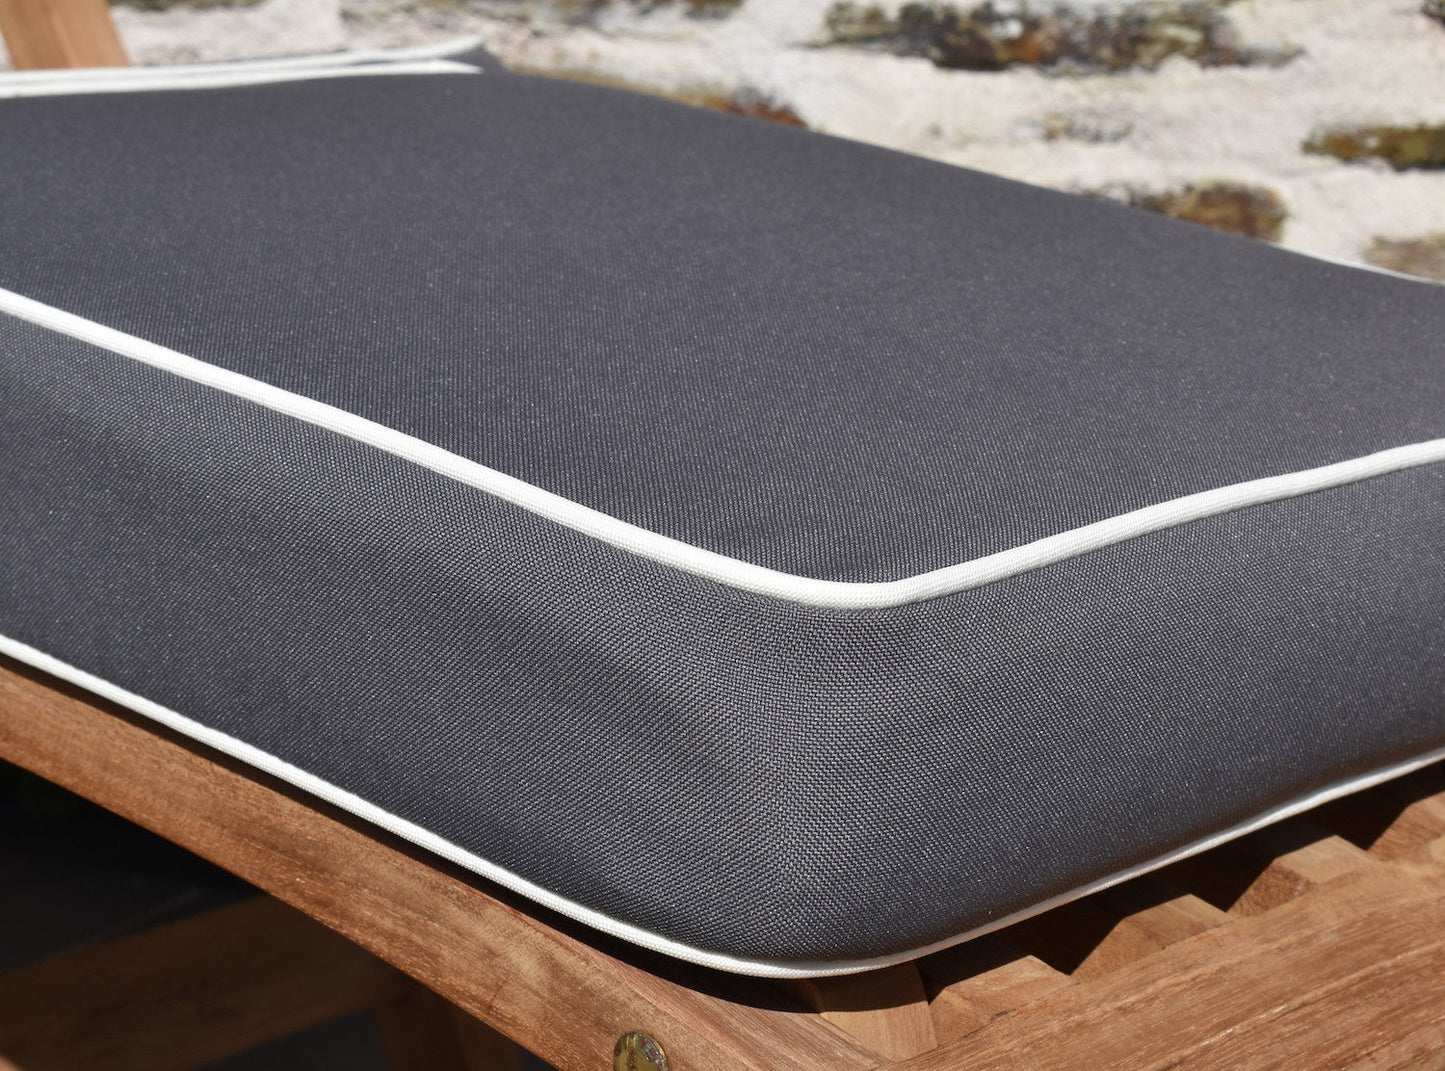 luxury grey steamer chair cushion fabric close up detail